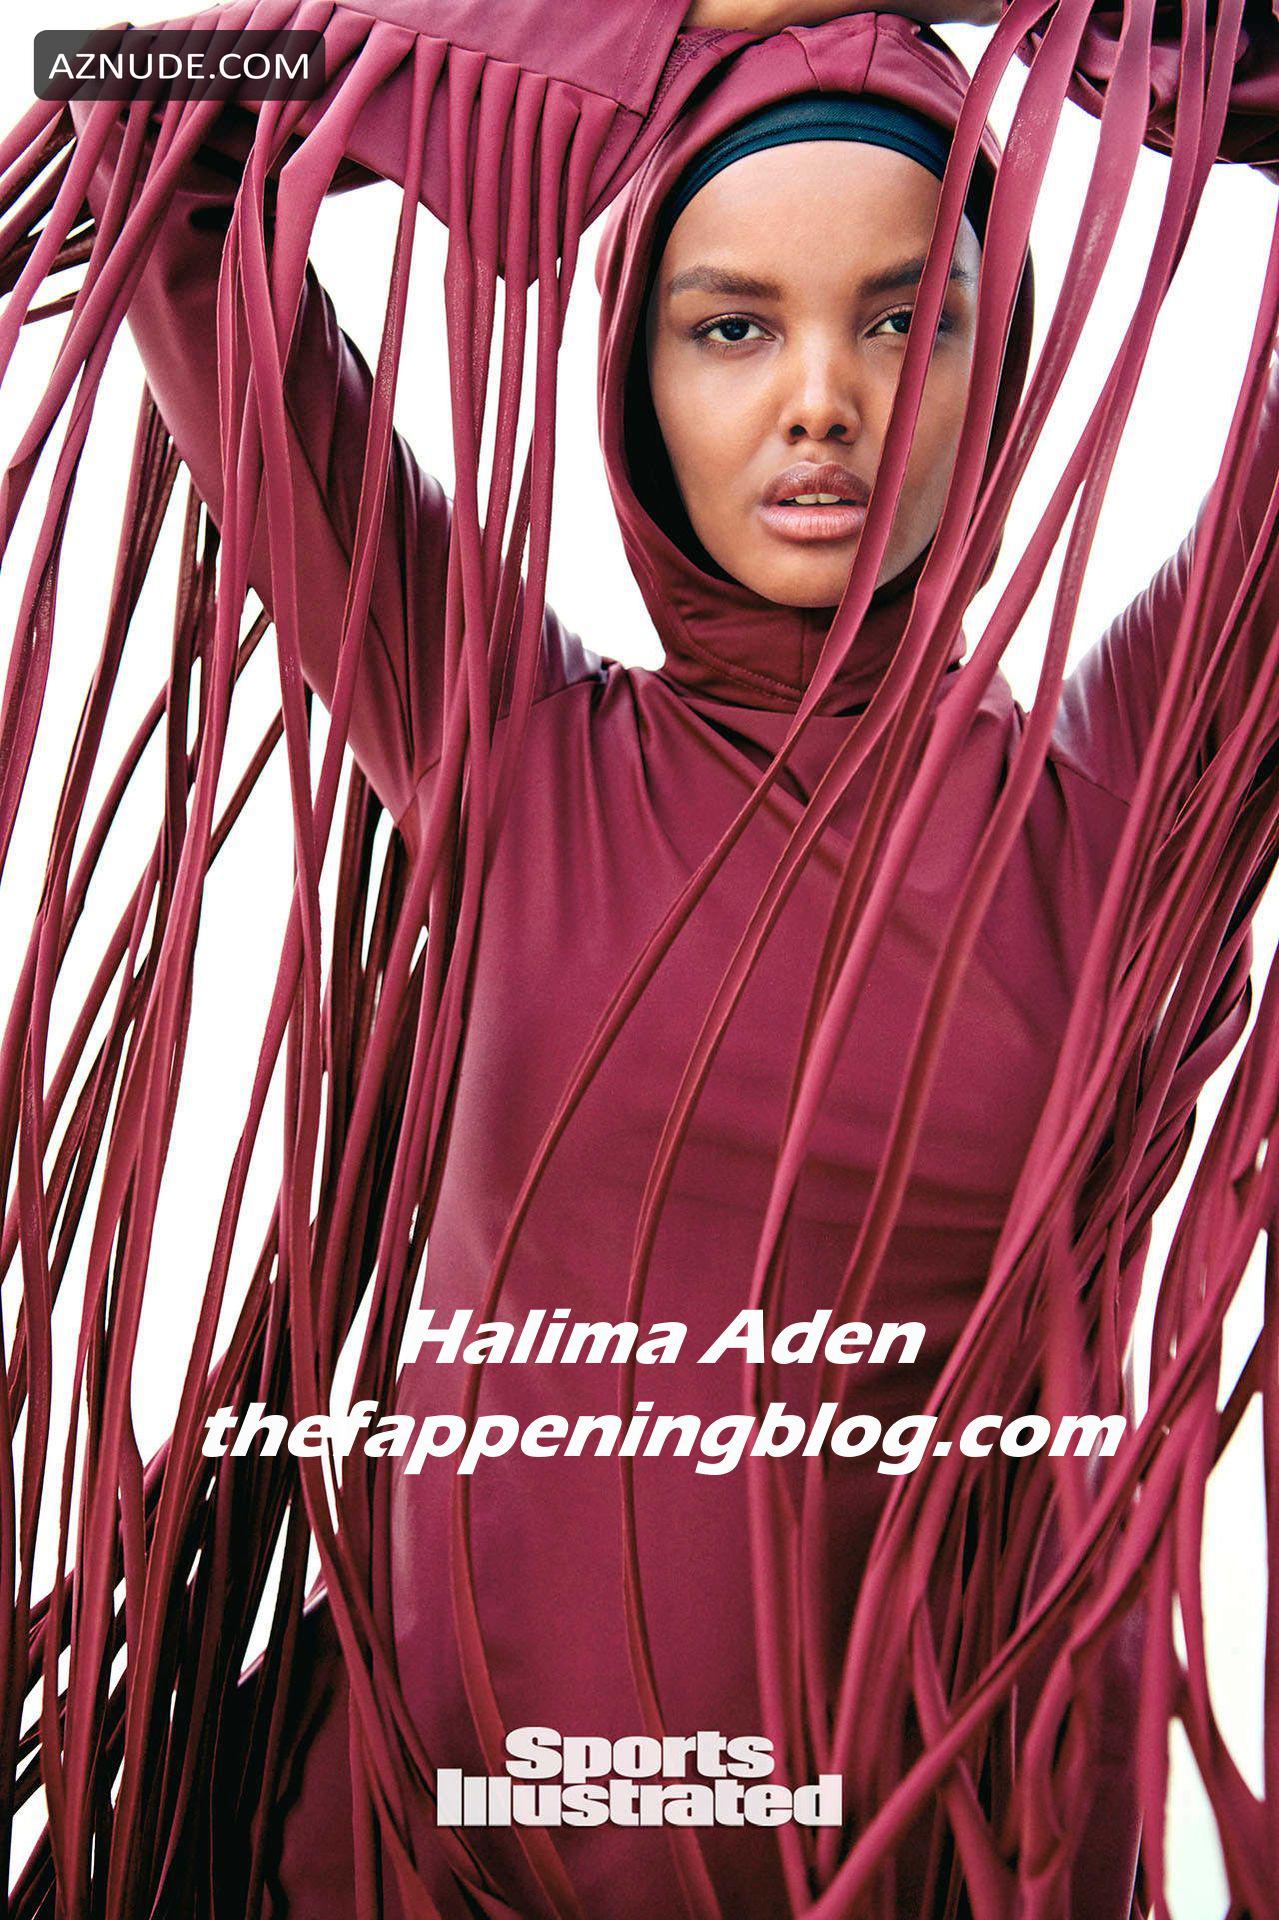 Aden nude halima Halima Aden